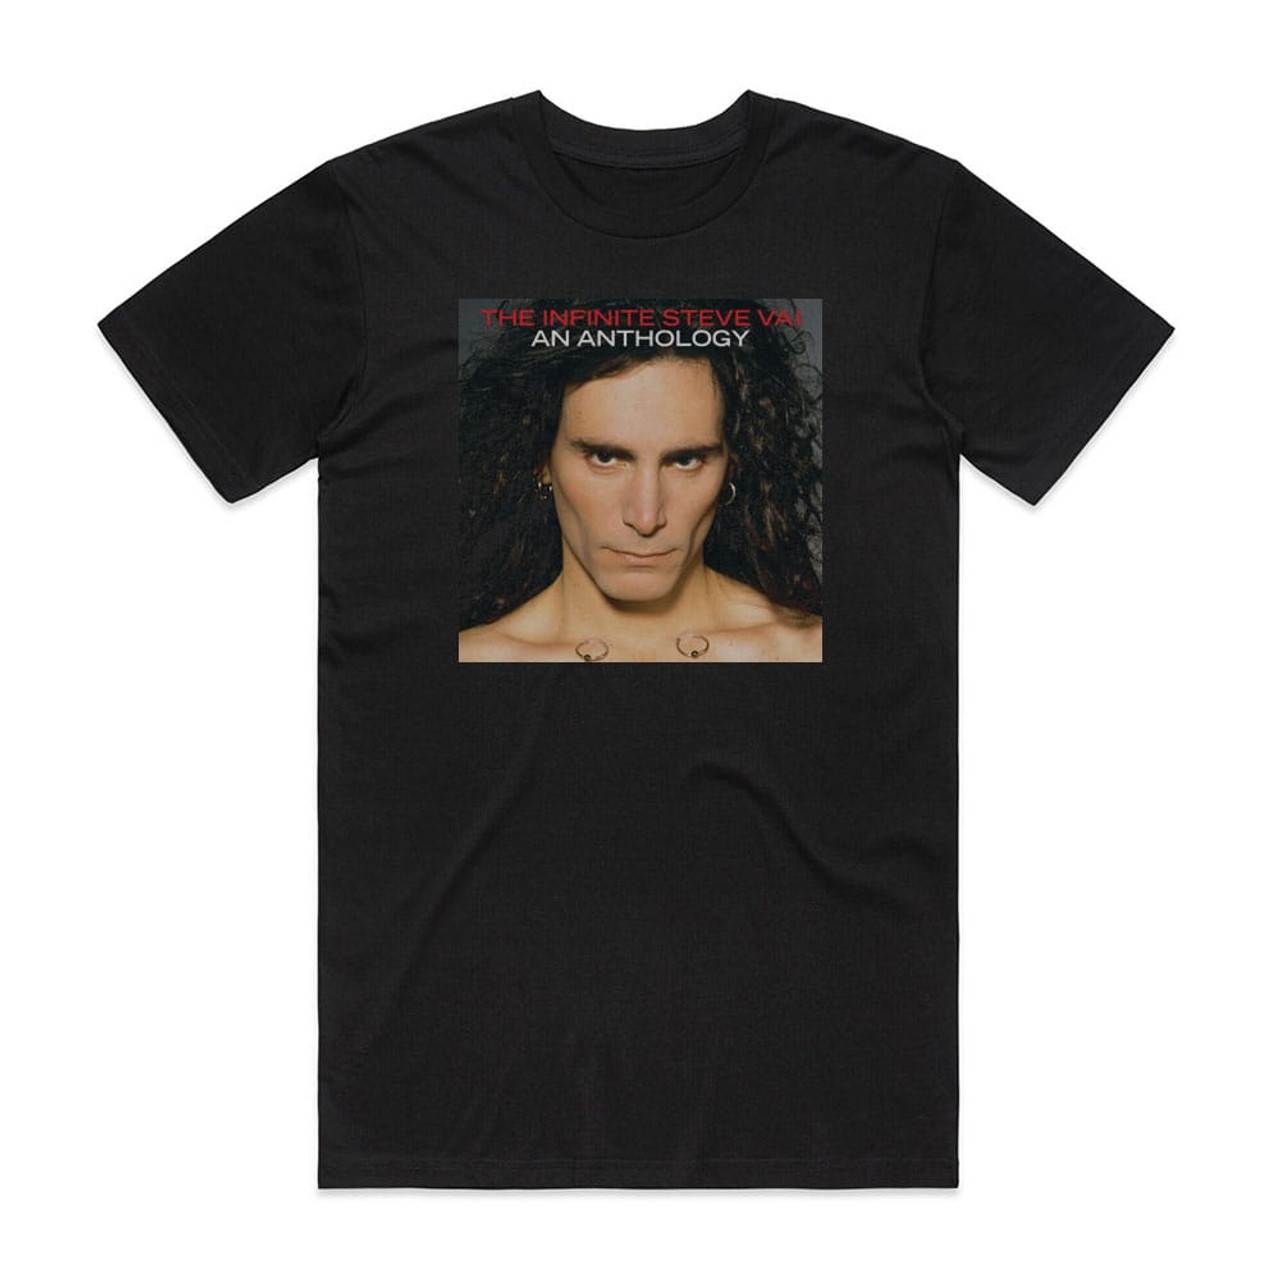 Steve Vai The Infinite Steve Vai An Anthology Album Cover T-Shirt Black